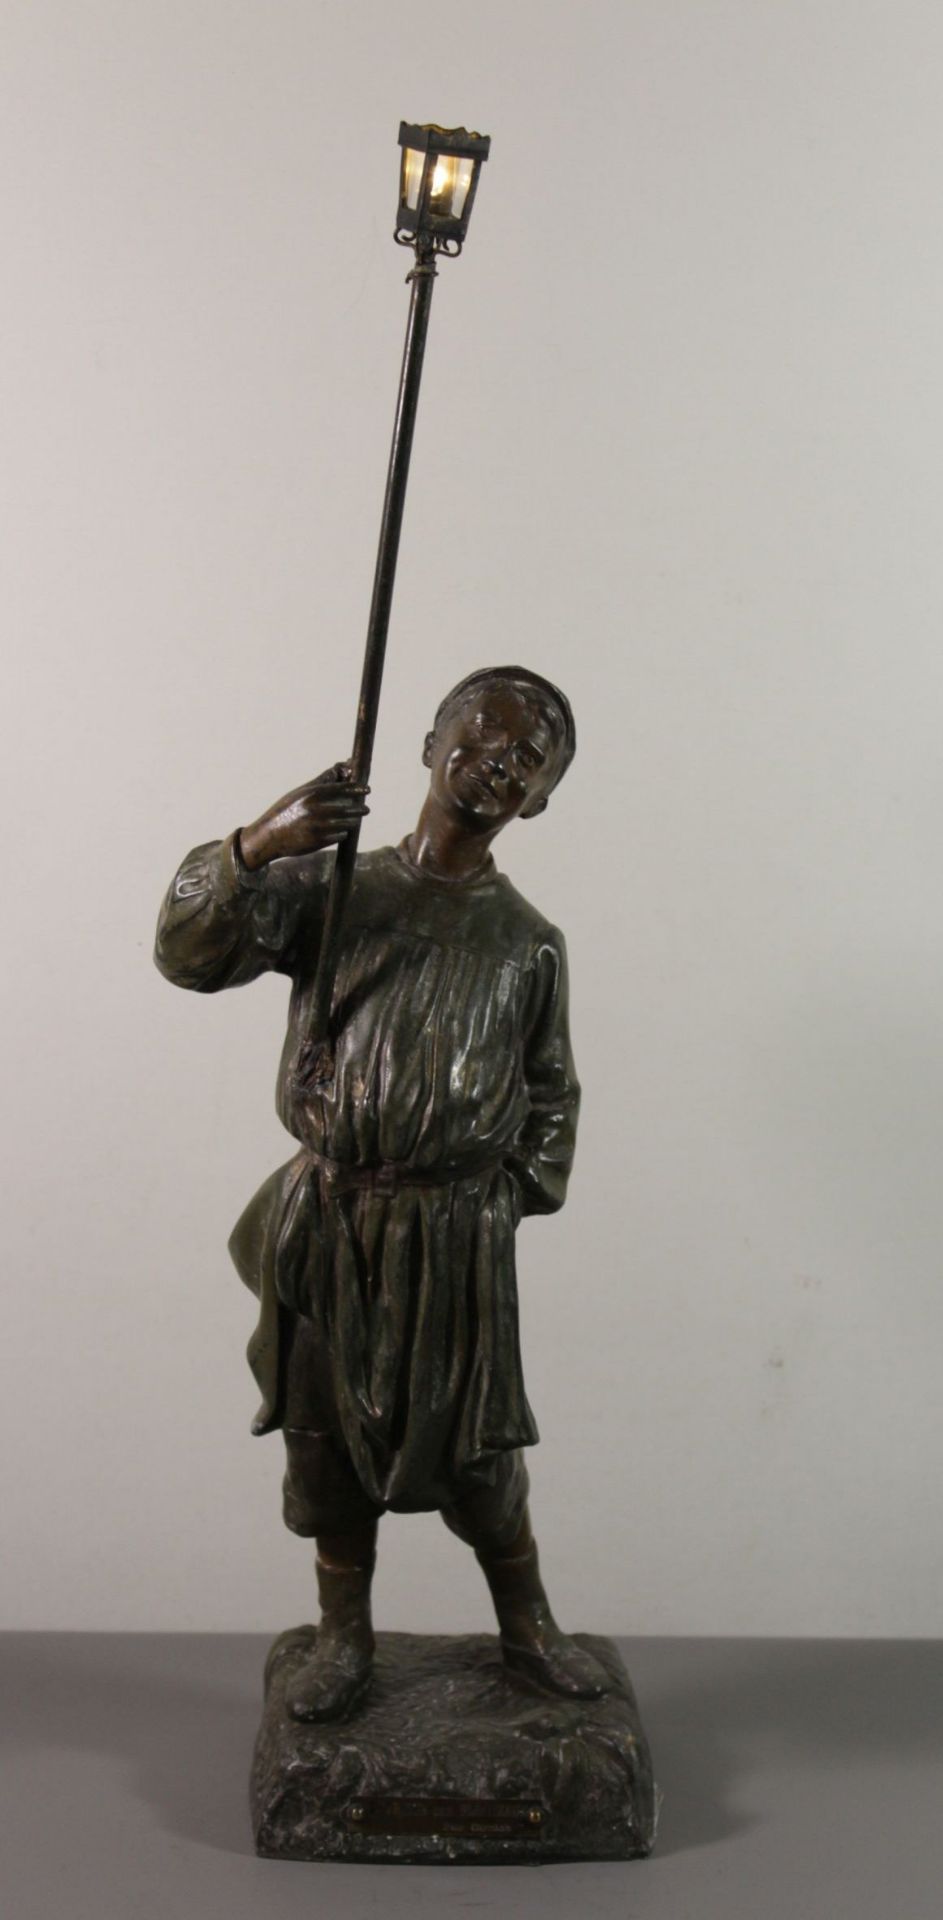 Figur,  wohl Zinkguss bronziert, betitelt "Retraite aux Flambeaux par Gottlob", Laterne beleuchtbar